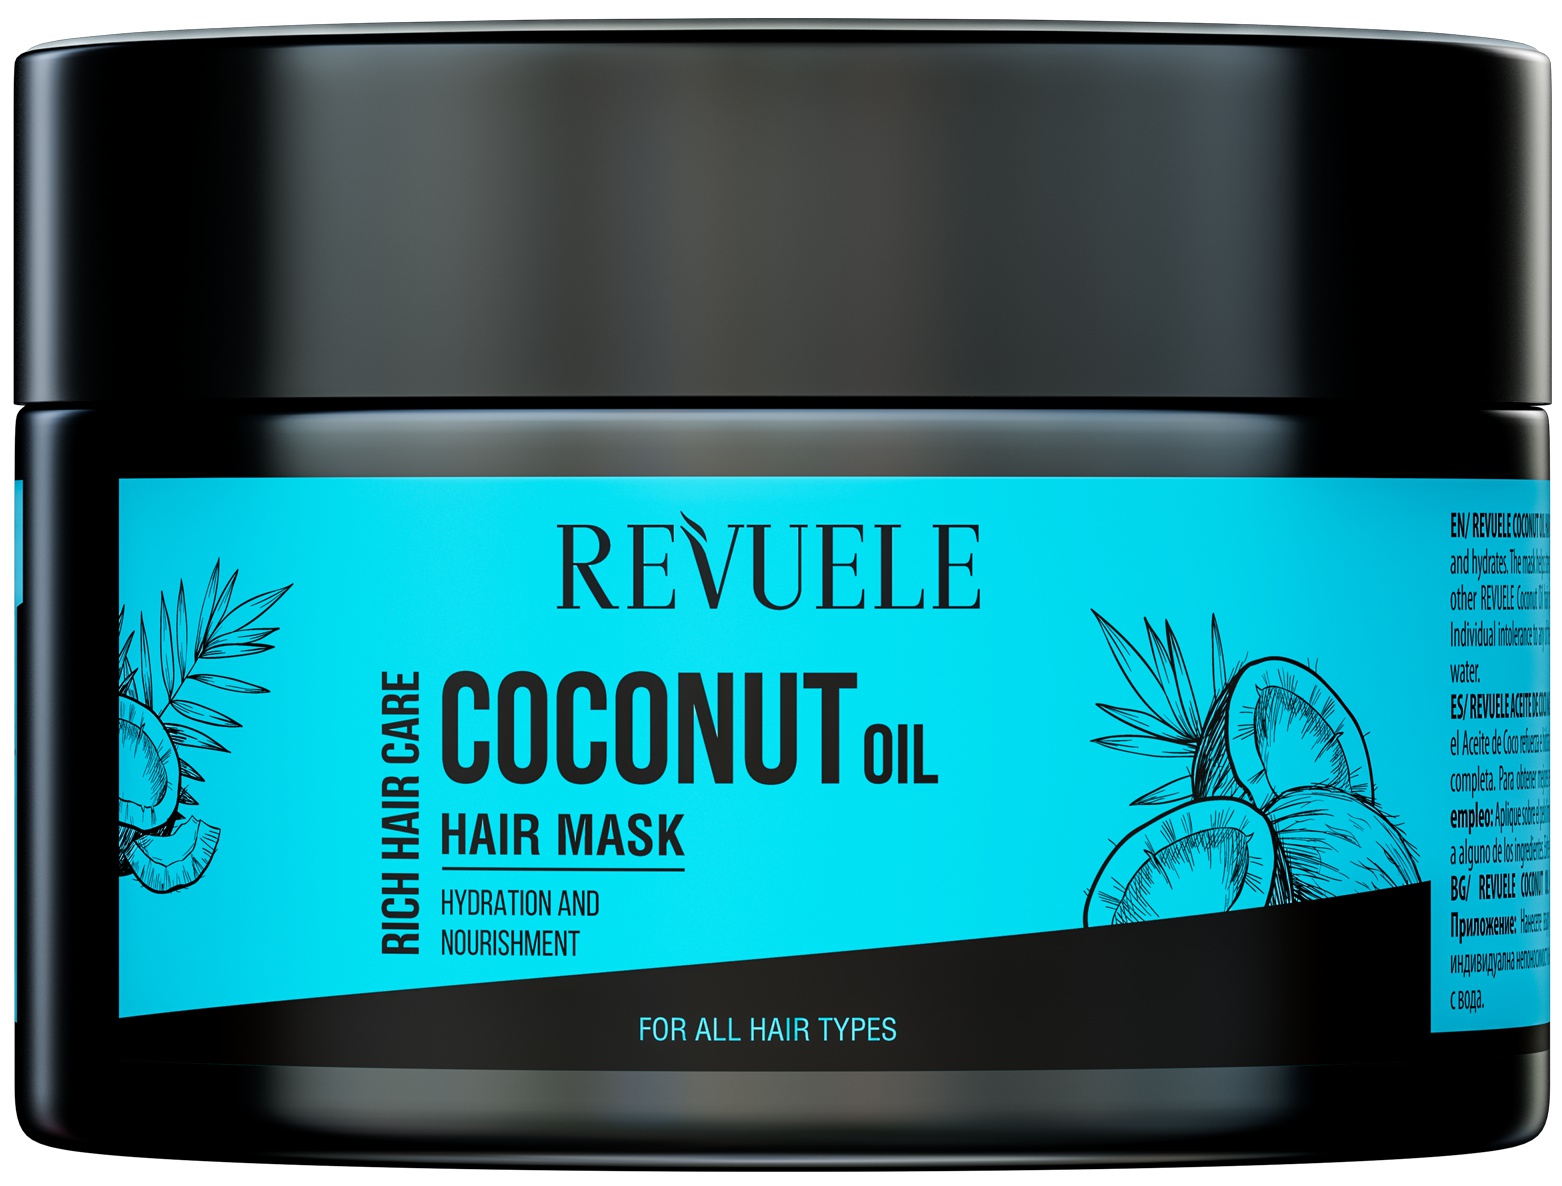 Revuele Coconut Oil Hair Mask